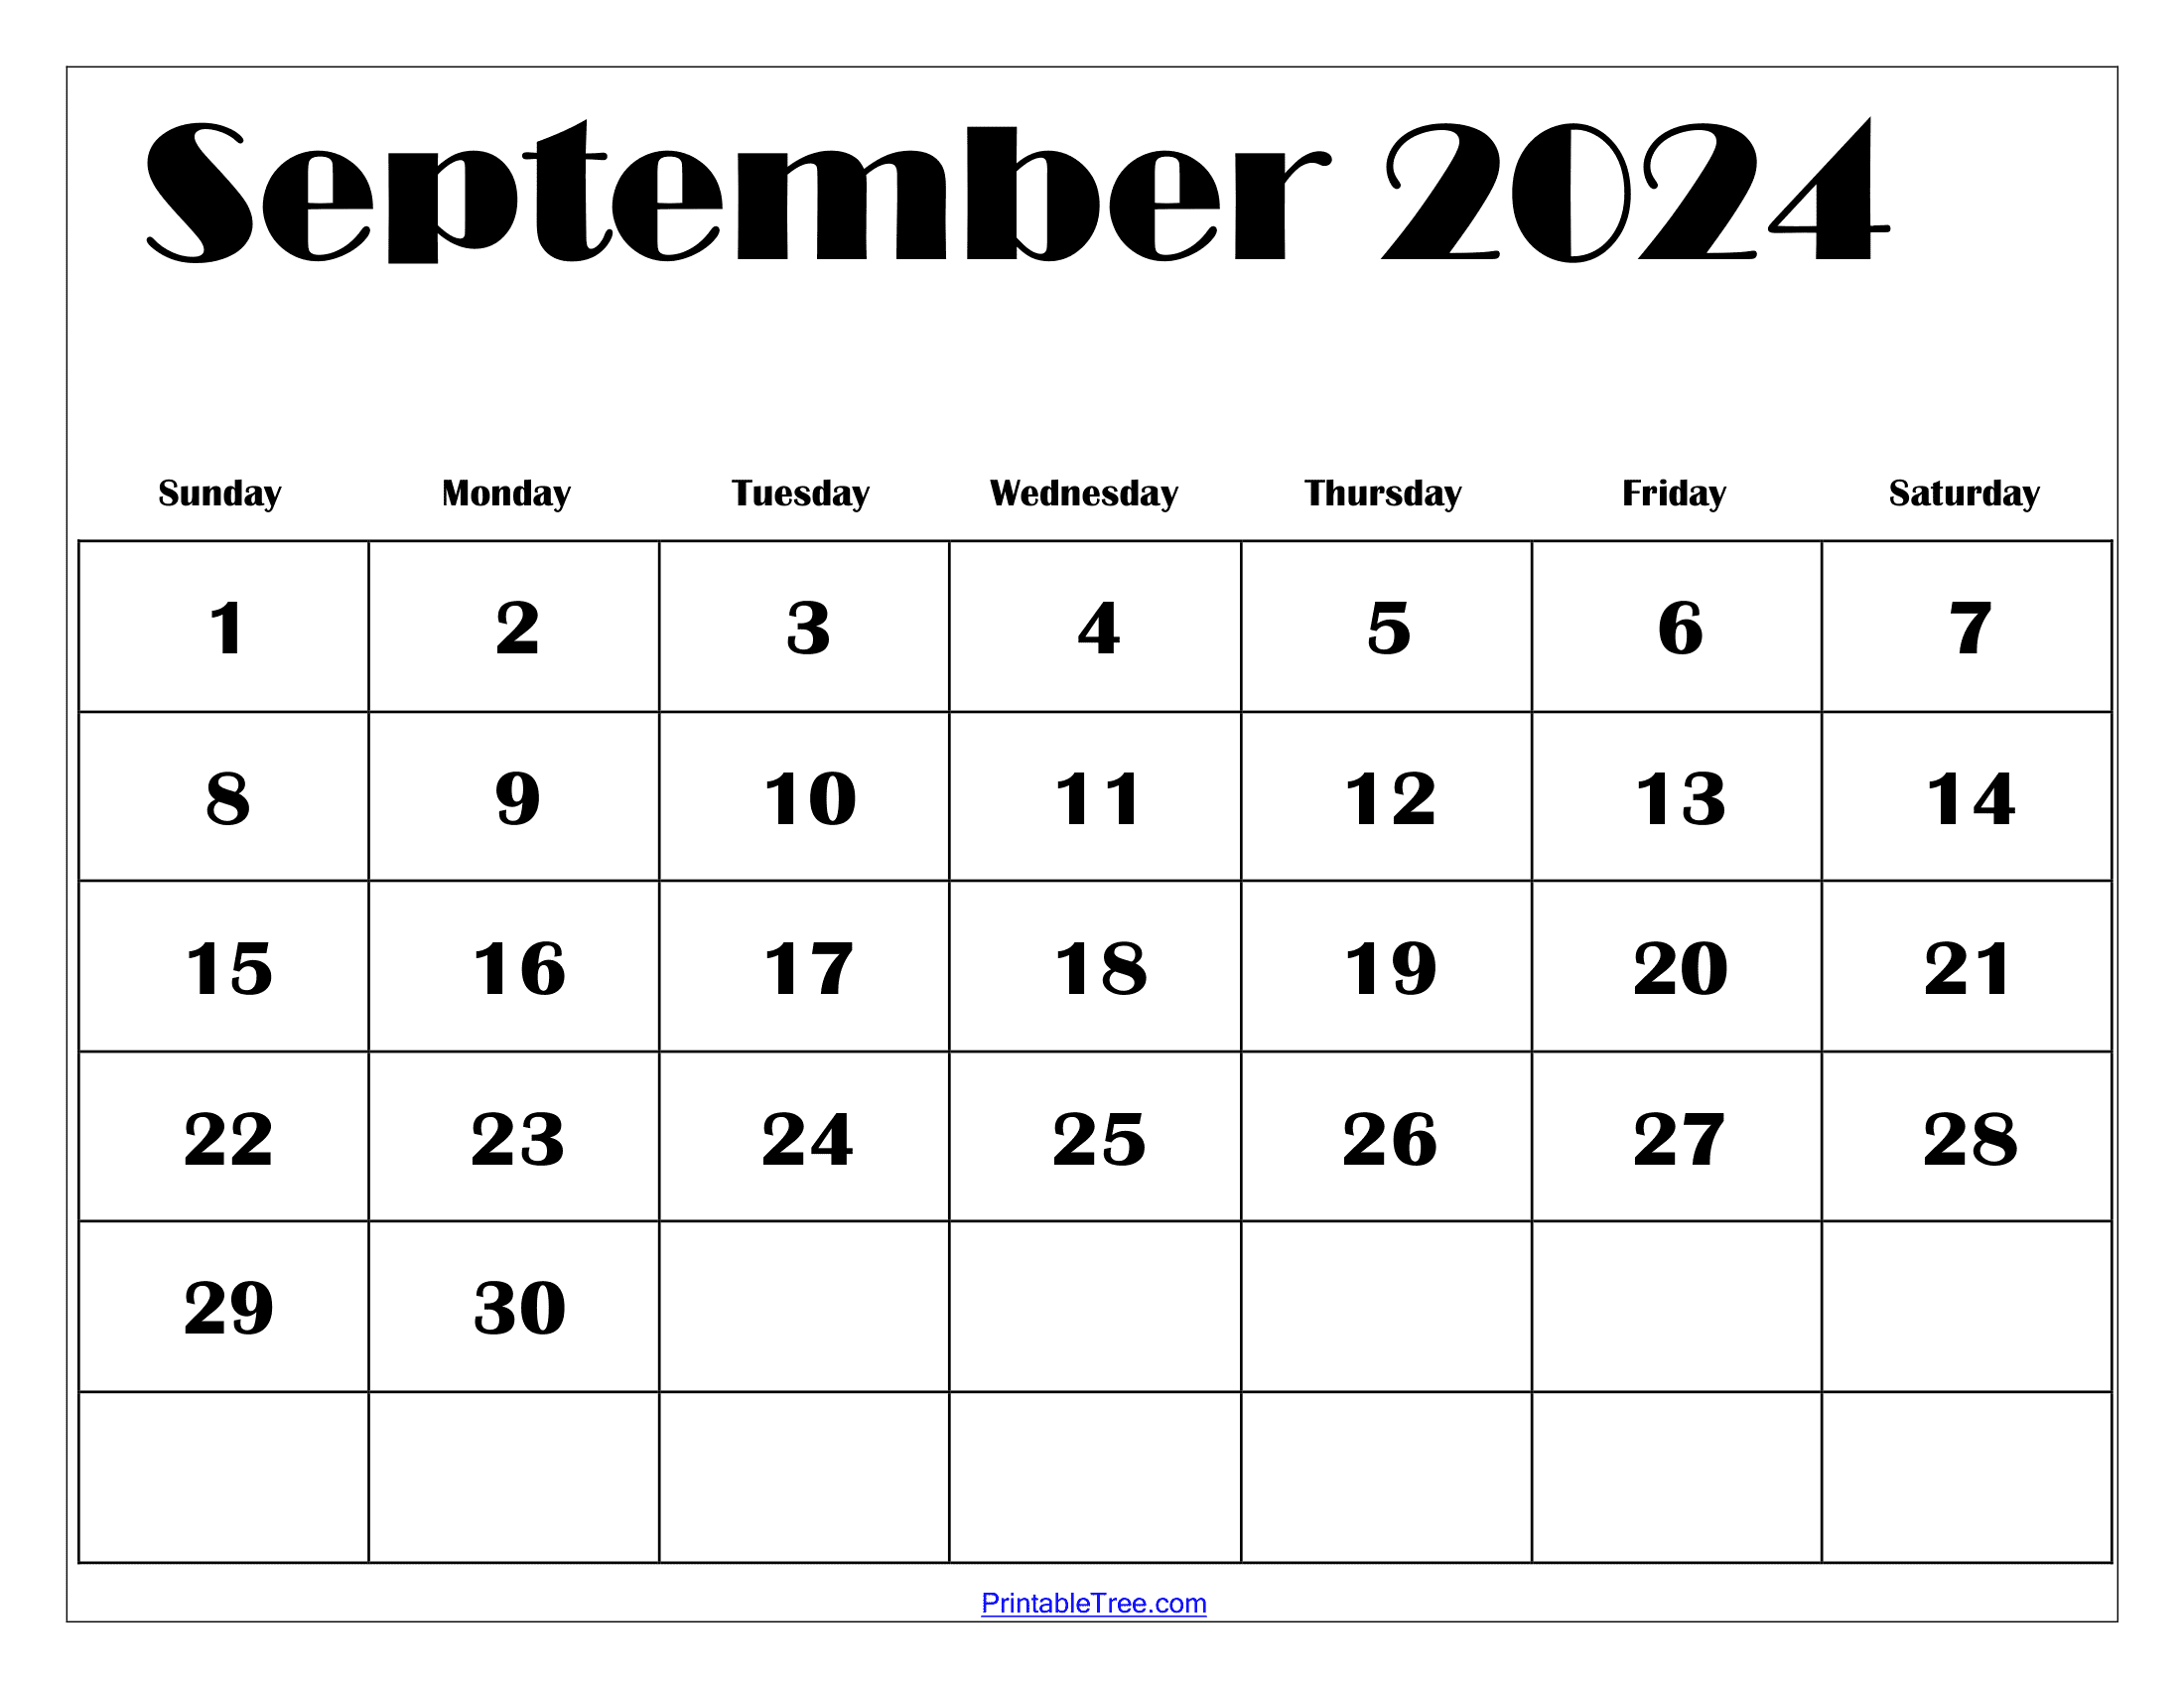 September 2024 Calendar Printable Pdf With Holidays for September Printable Calendar 2024